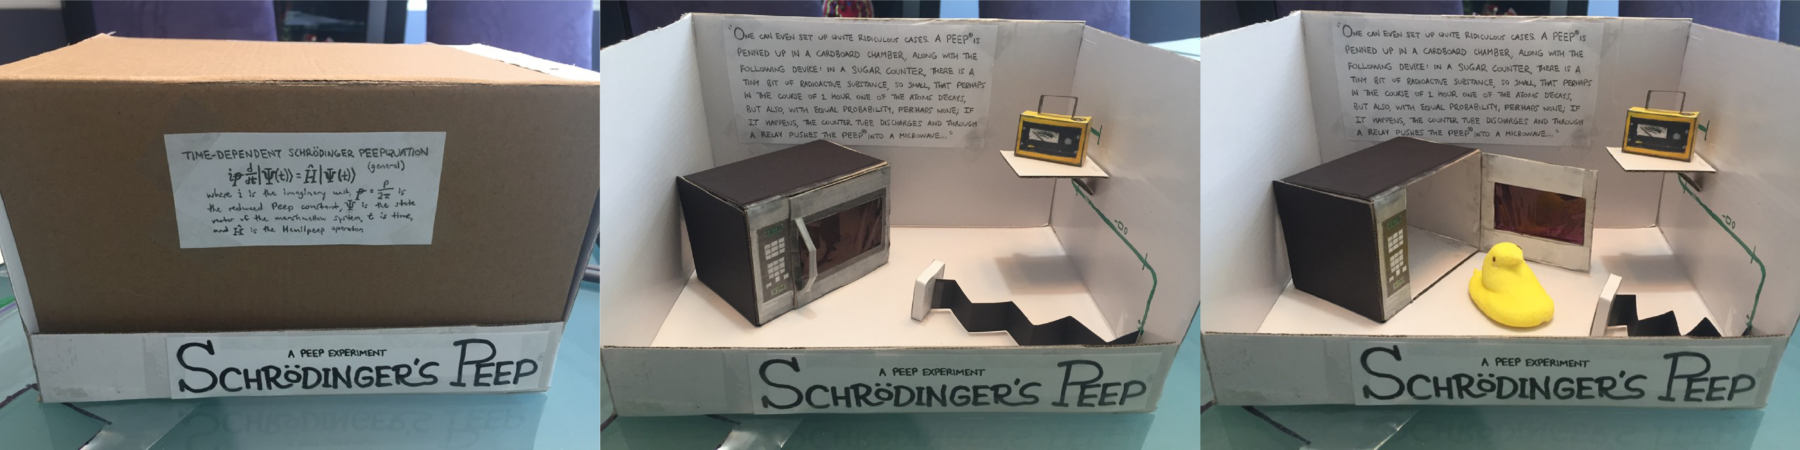 Schrödinger's Peep